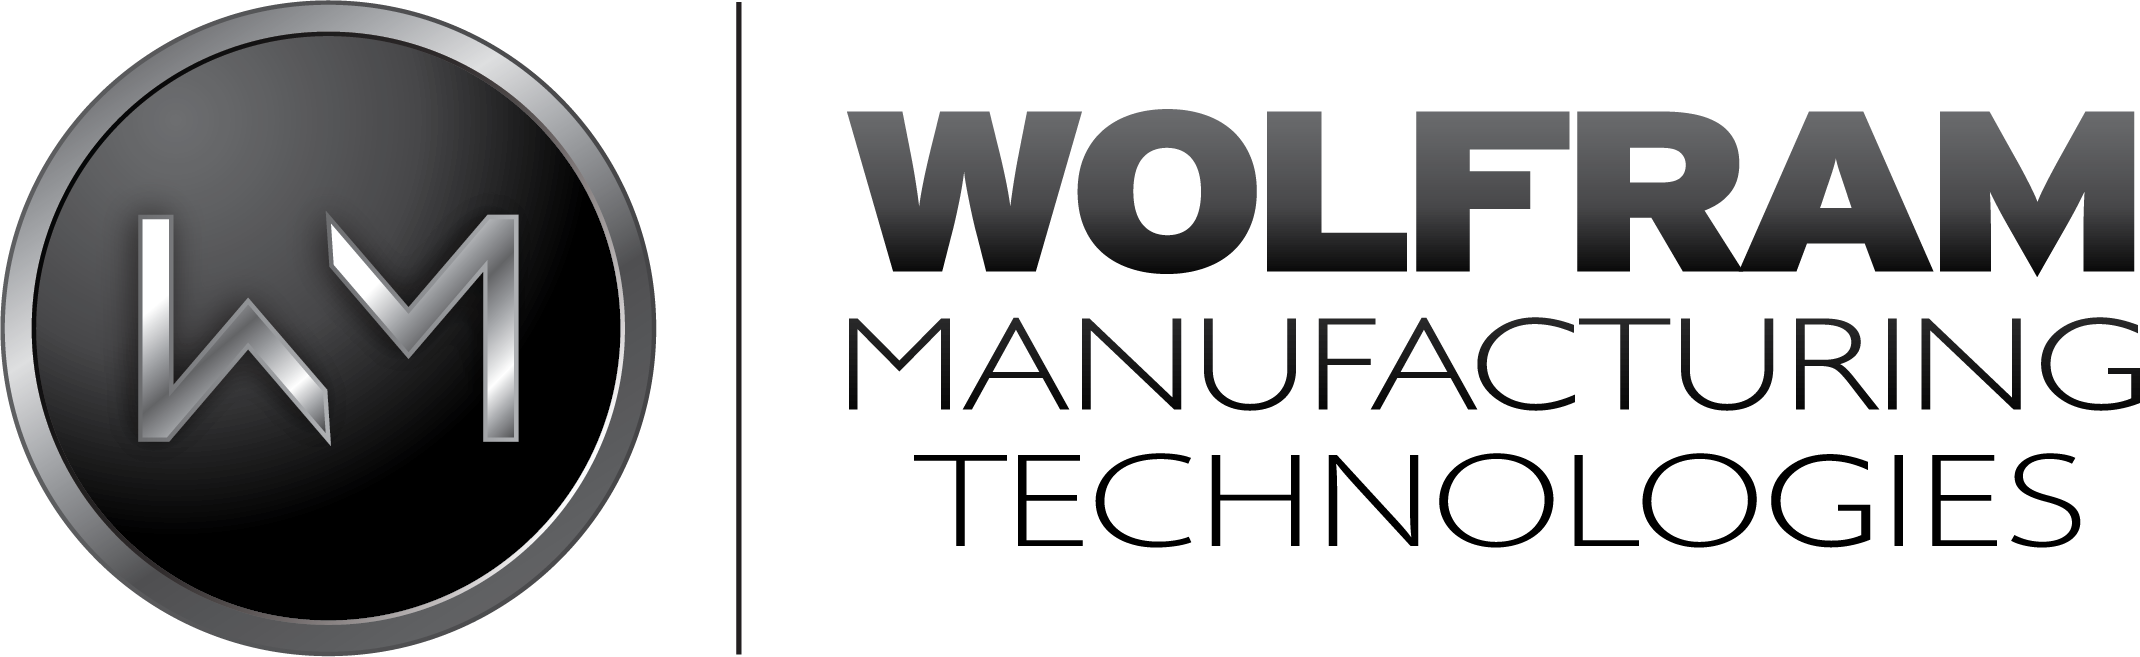 Wolfram Manufacturing Technologies Loog